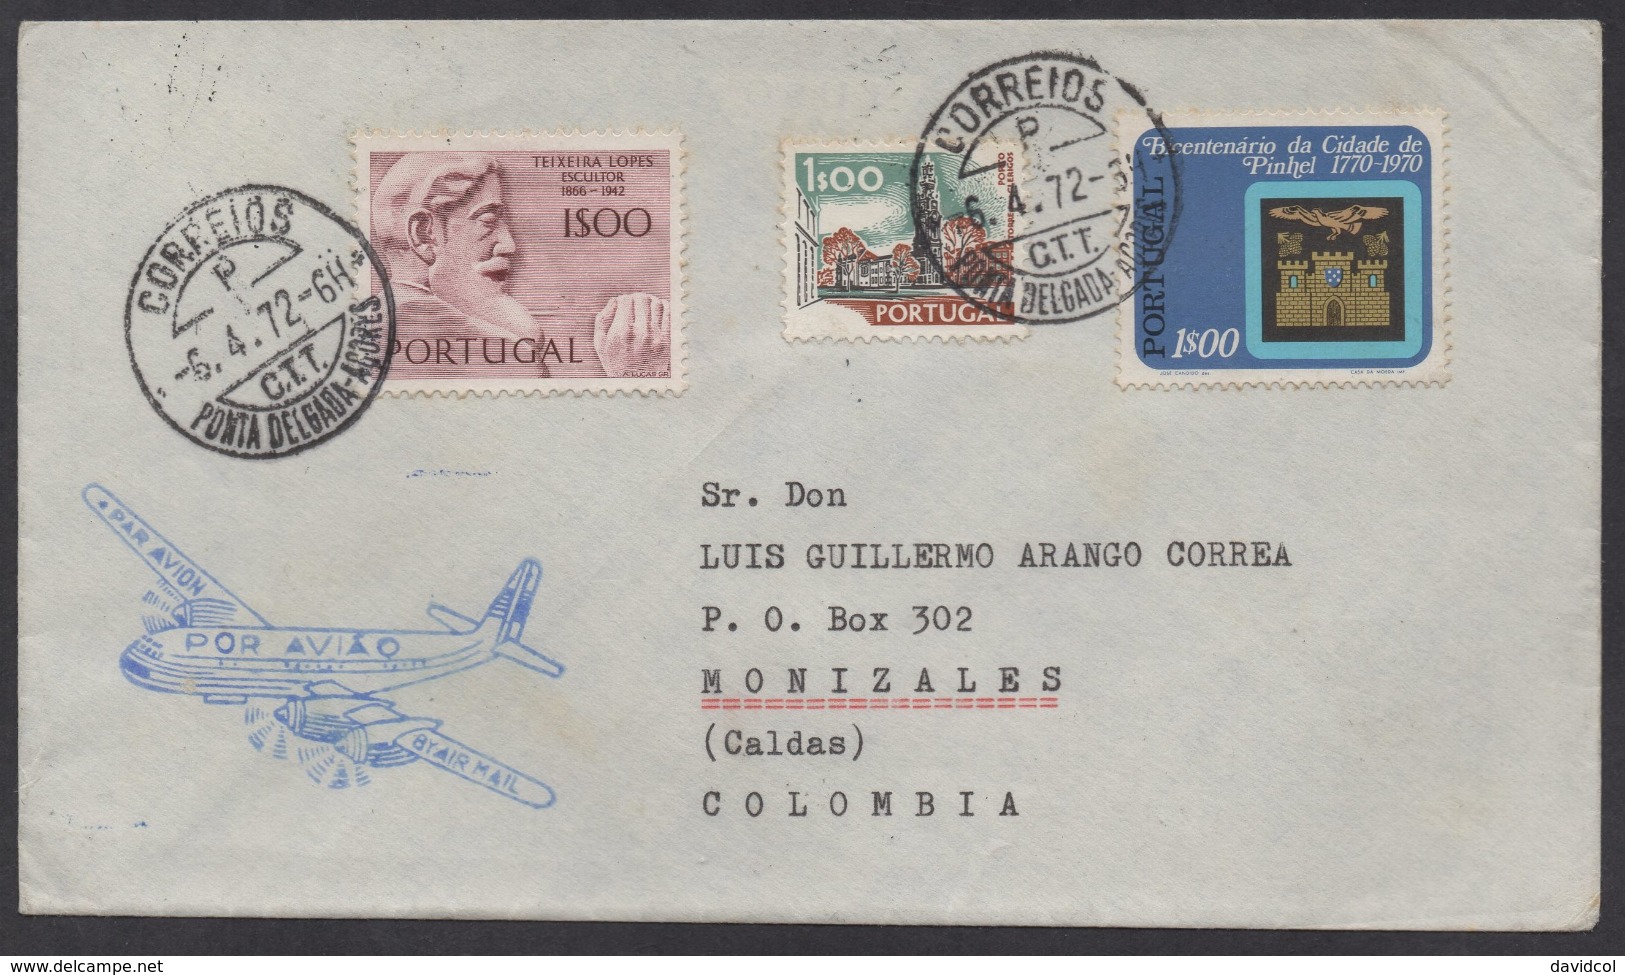 SA184- PORTUGAL-AZORES - 1972 - PONTA DELGADA 6-4-72 TO MANIZALES-CALDAS-COLOMBIA 12-IV-72 - Portugiesisch-Afrika